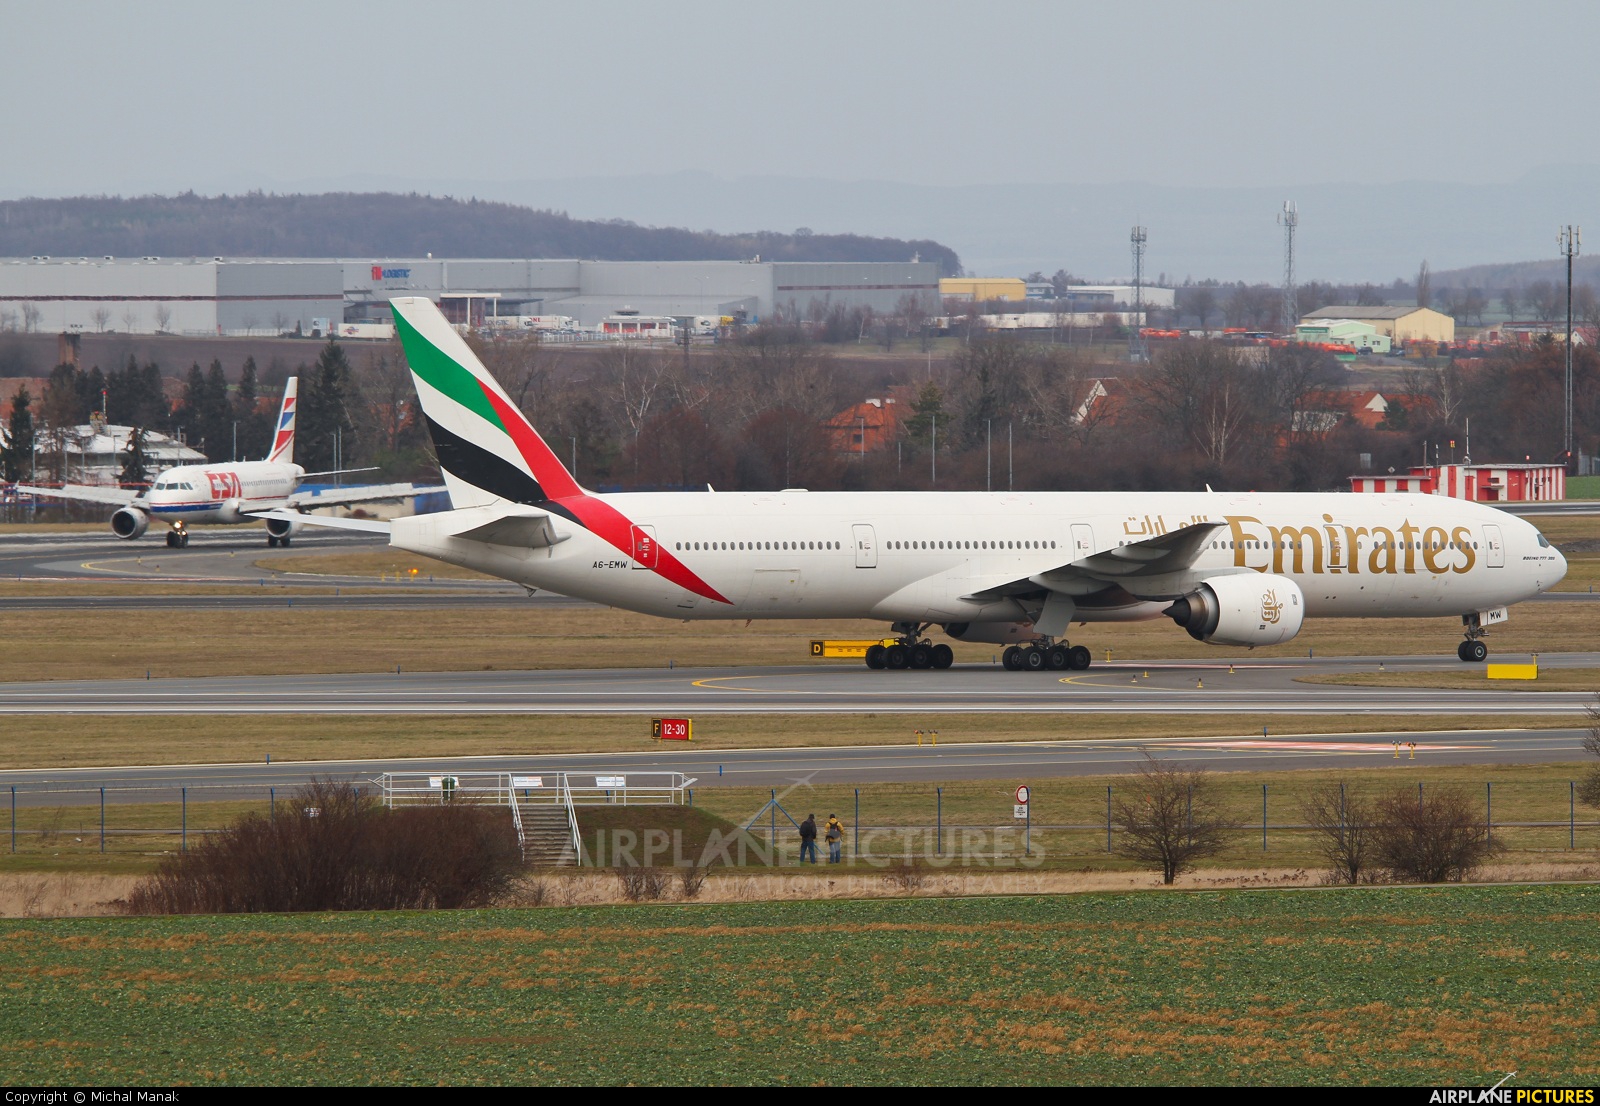 Emirates Airlines A6-EMW aircraft at Prague - Václav Havel